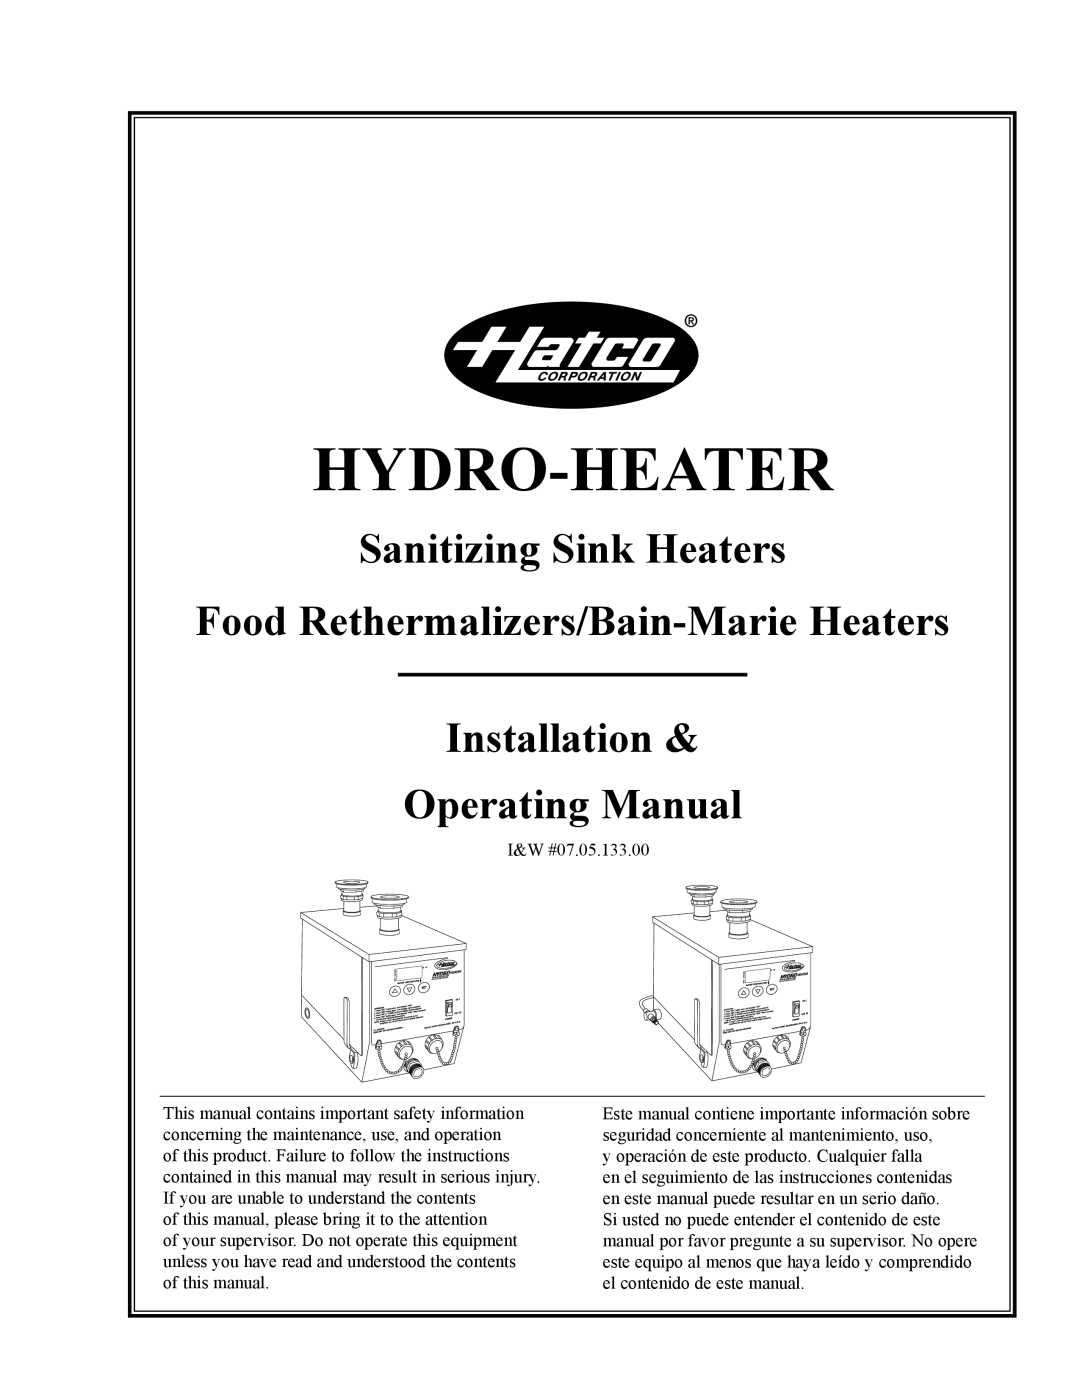 Hatco Hatco 3CS2 manual Hydro-Heater, Sanitizing Sink Heaters, Food Rethermalizers/Bain-MarieHeaters 